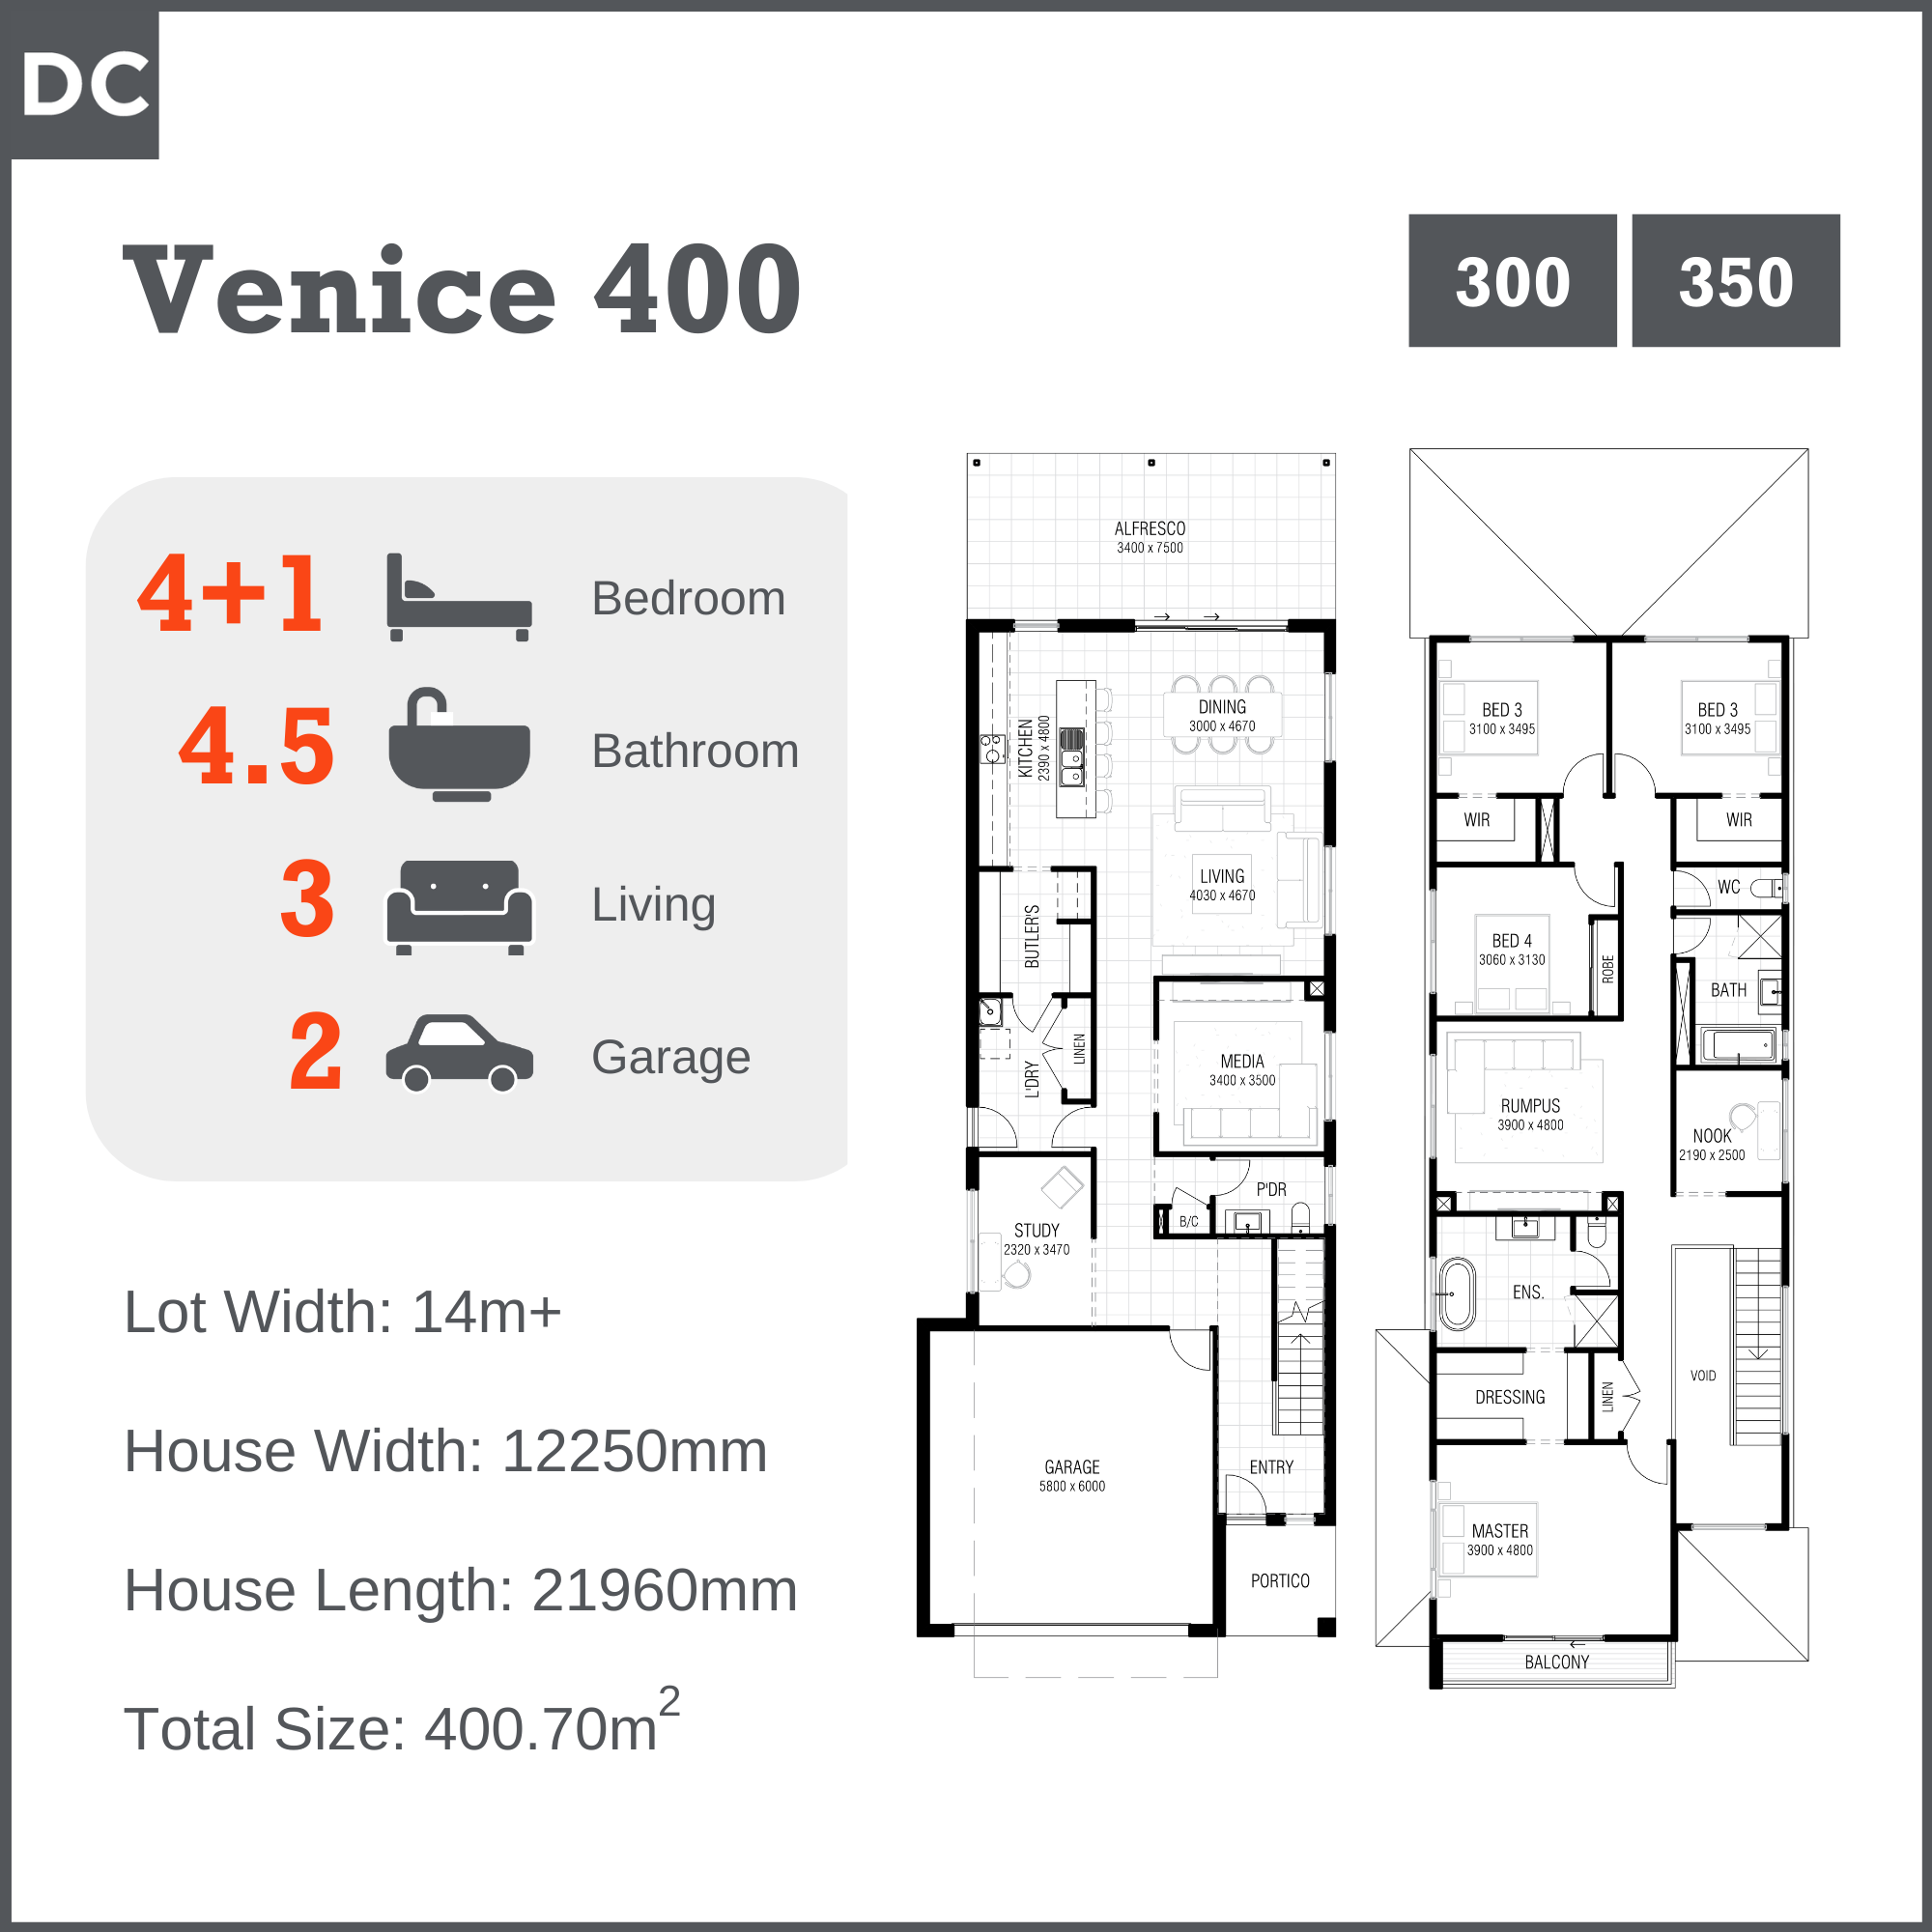 Venice 400 Home design - DC Living Range